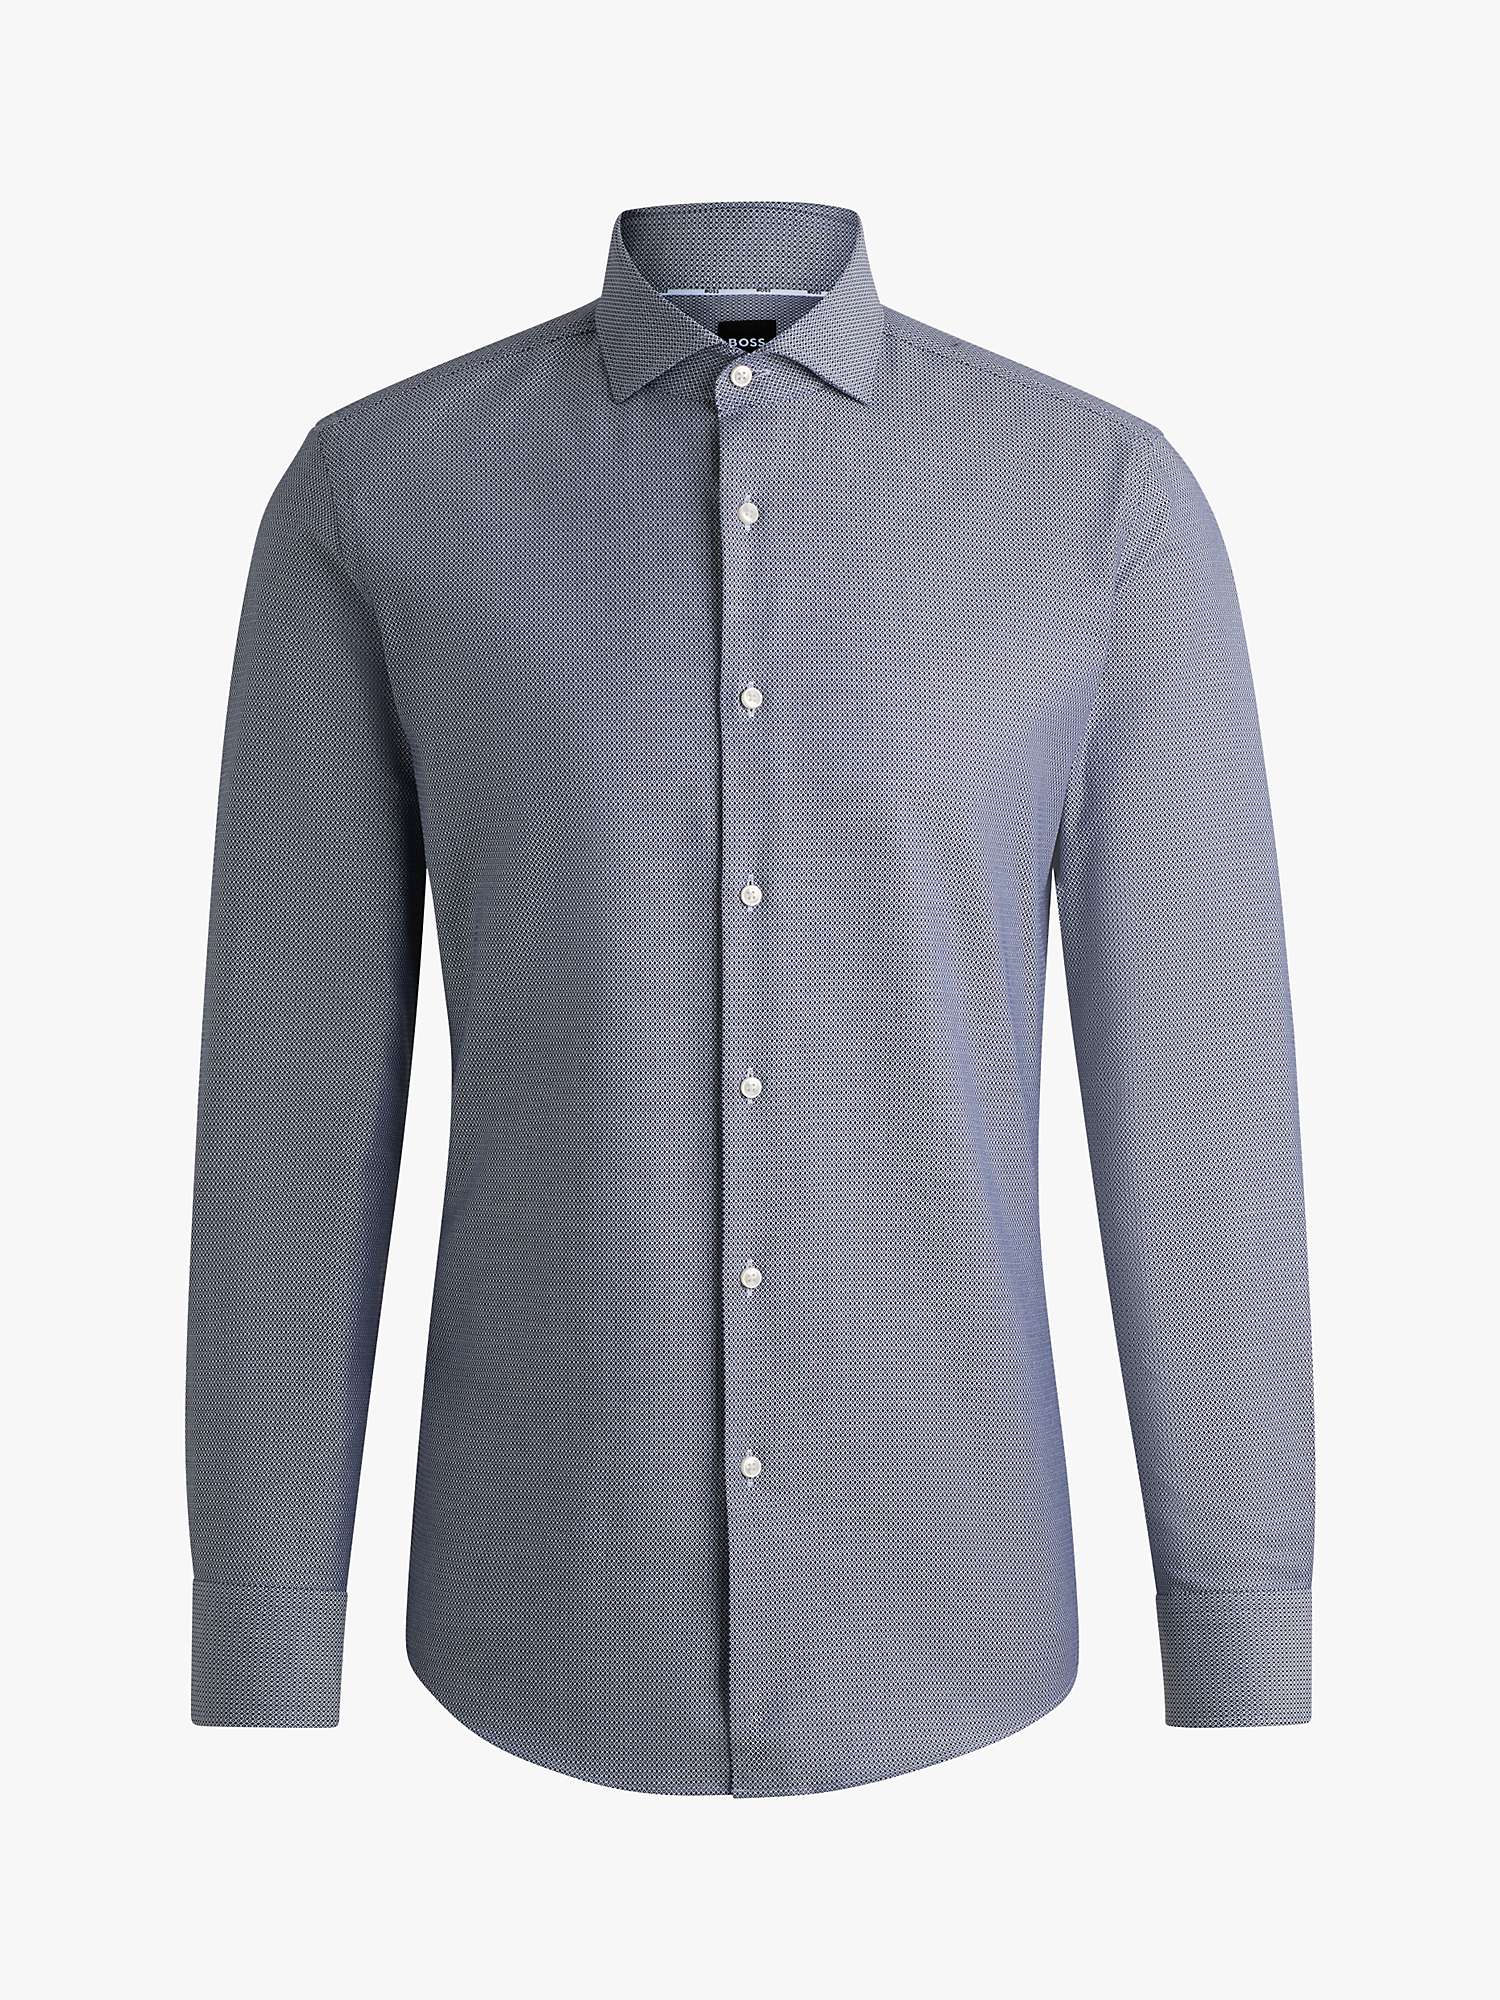 Buy BOSS H-Hank Spread Slim Fit Shirt, Navy Online at johnlewis.com